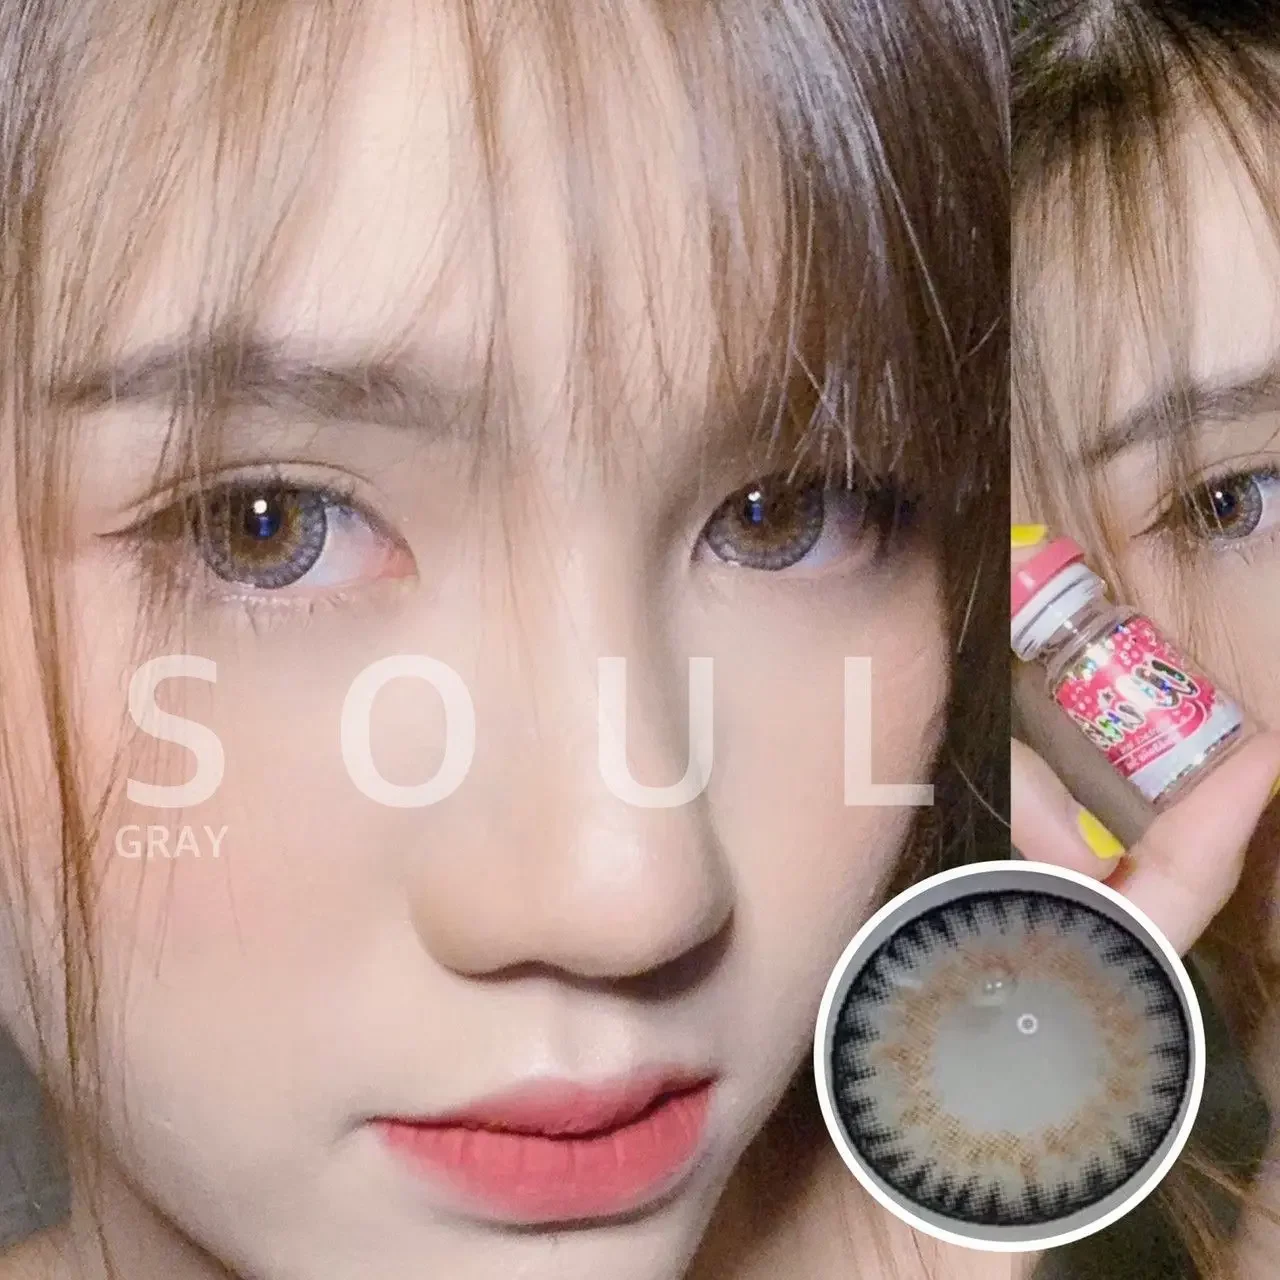 Soul Gray 16mm Korean Bigeyes Lens